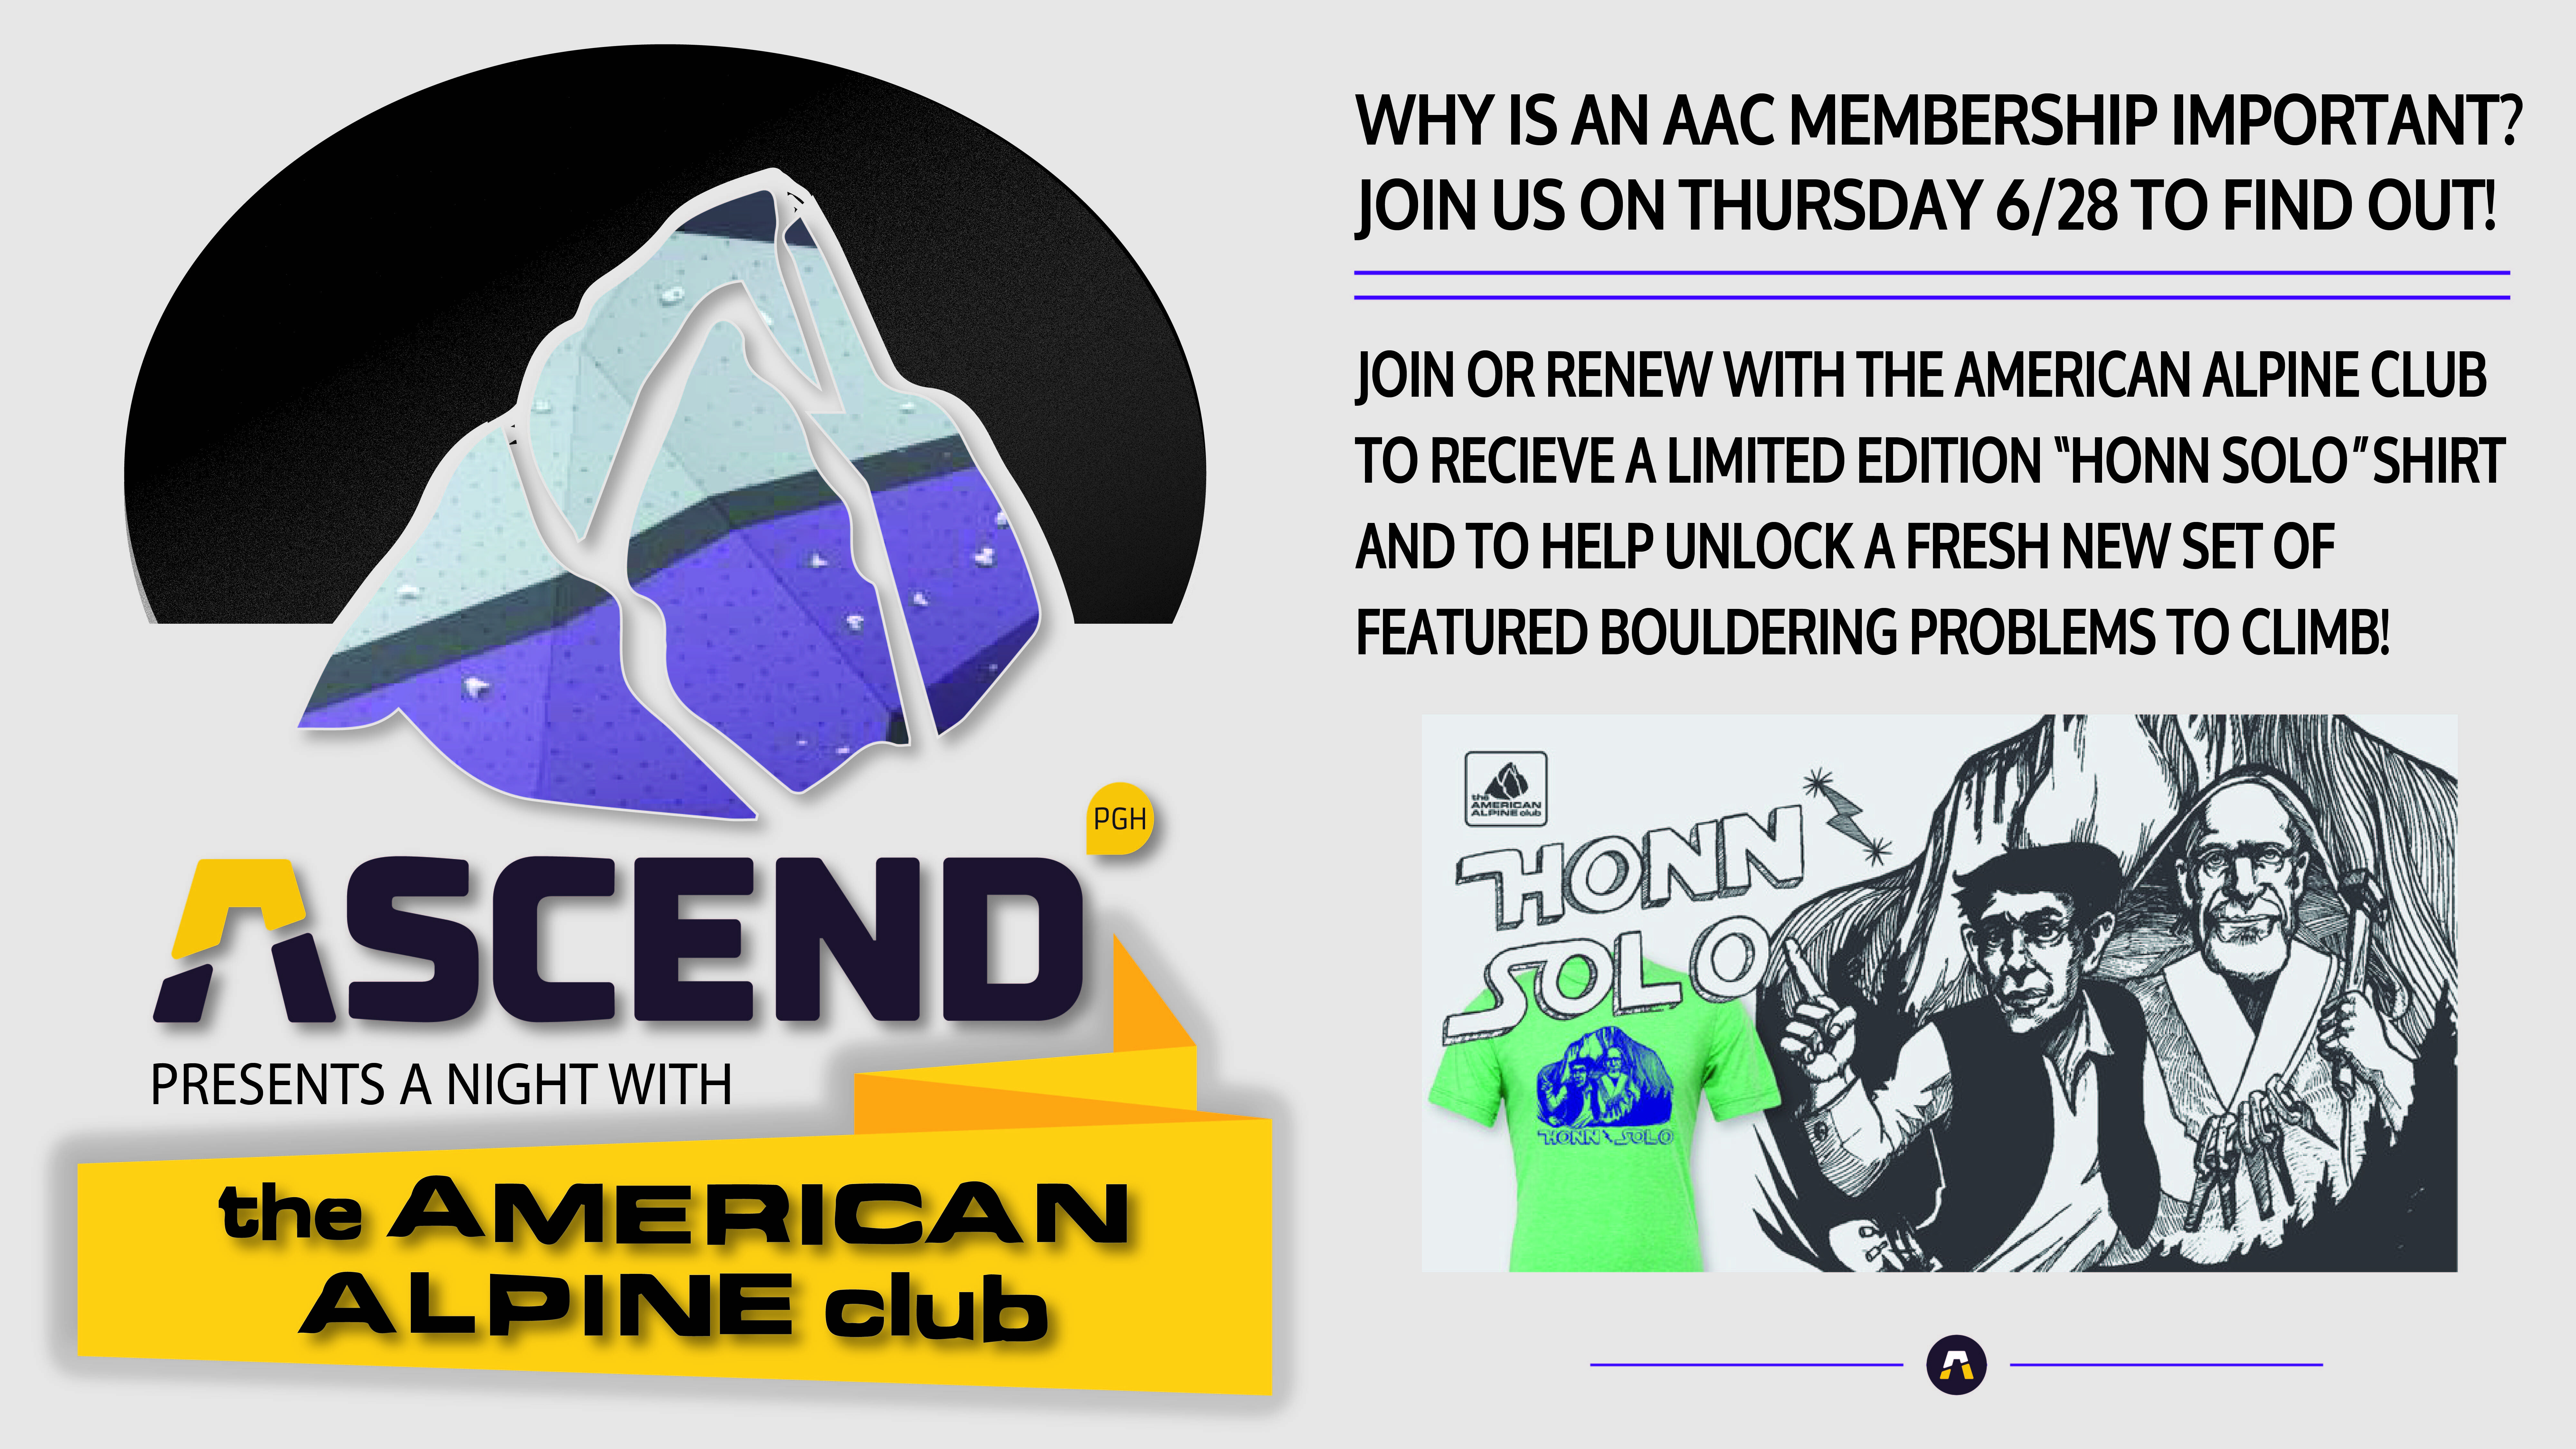 Rescue Benefit — The American Alpine Club